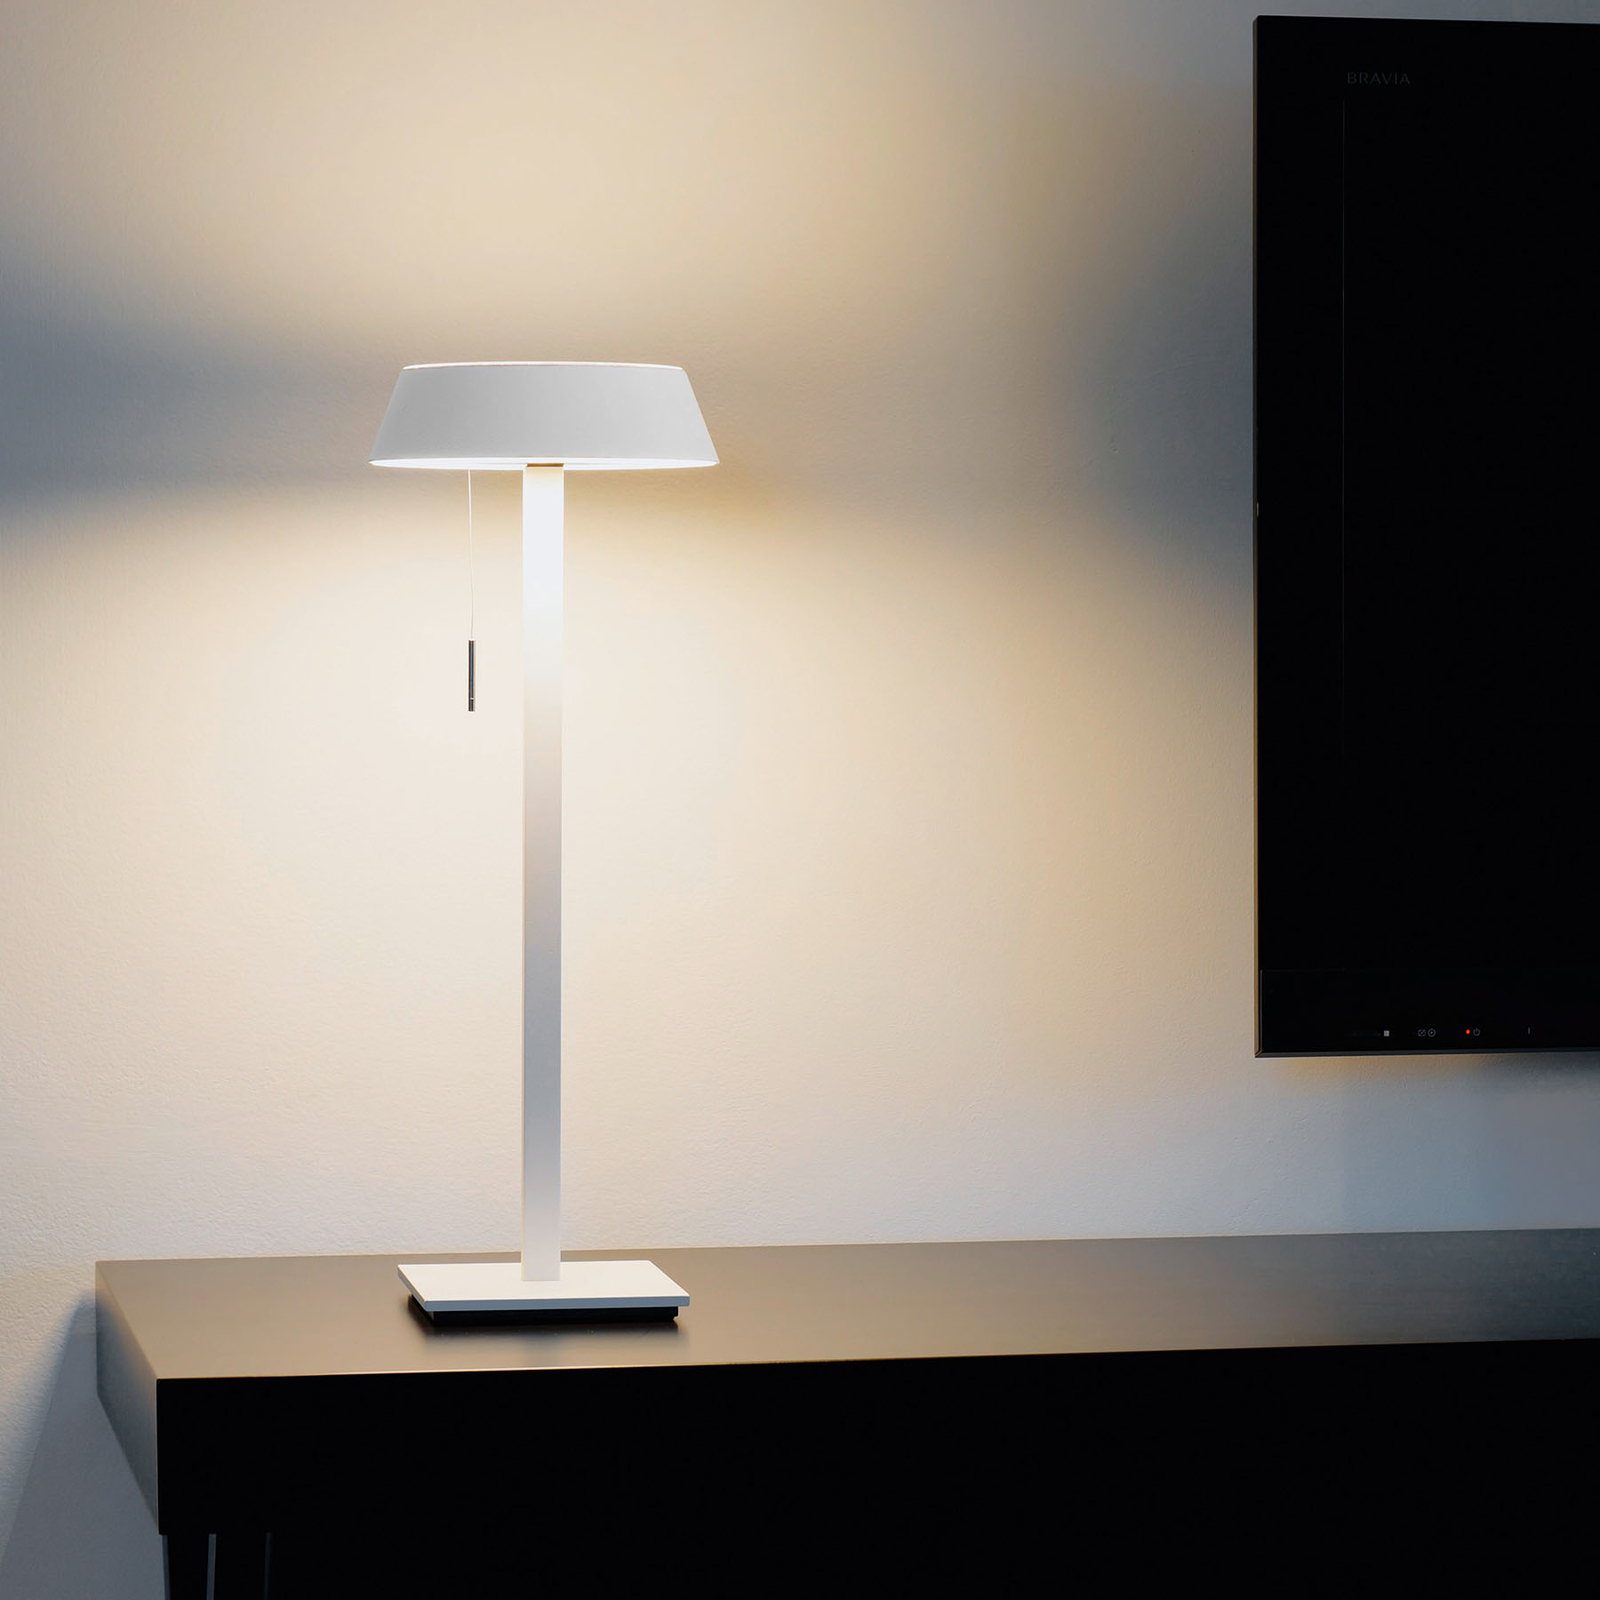 OLIGO Glance lampe à poser LED blanche mate